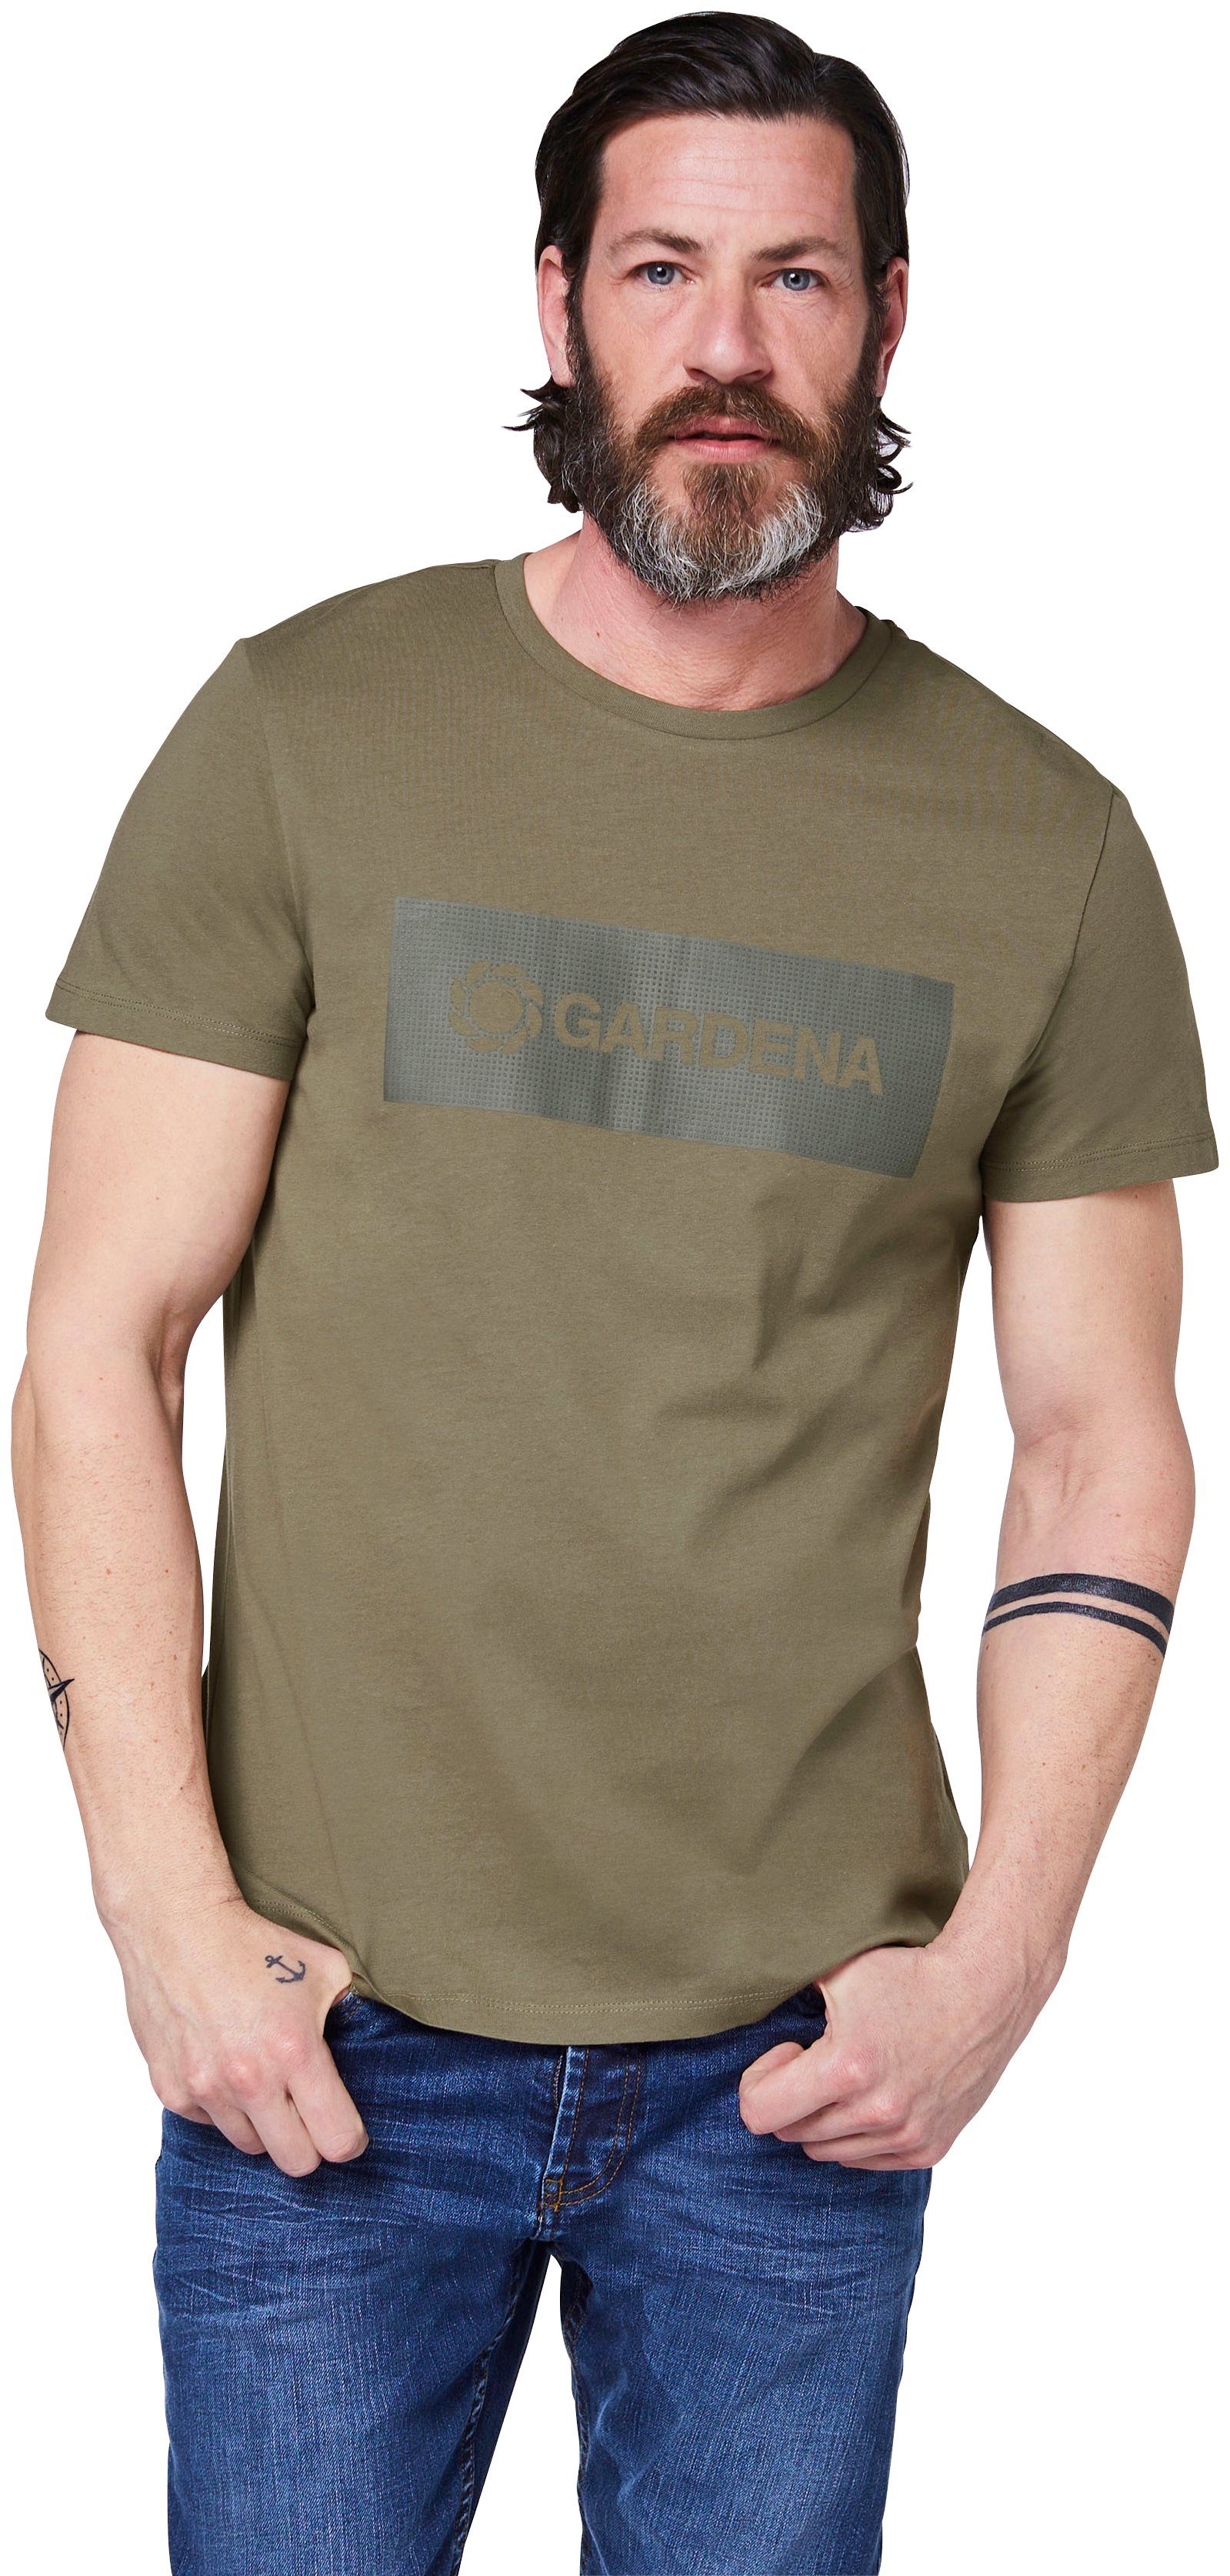 GARDENA T-Shirt Dusty Olive Gardena-Logodruck mit